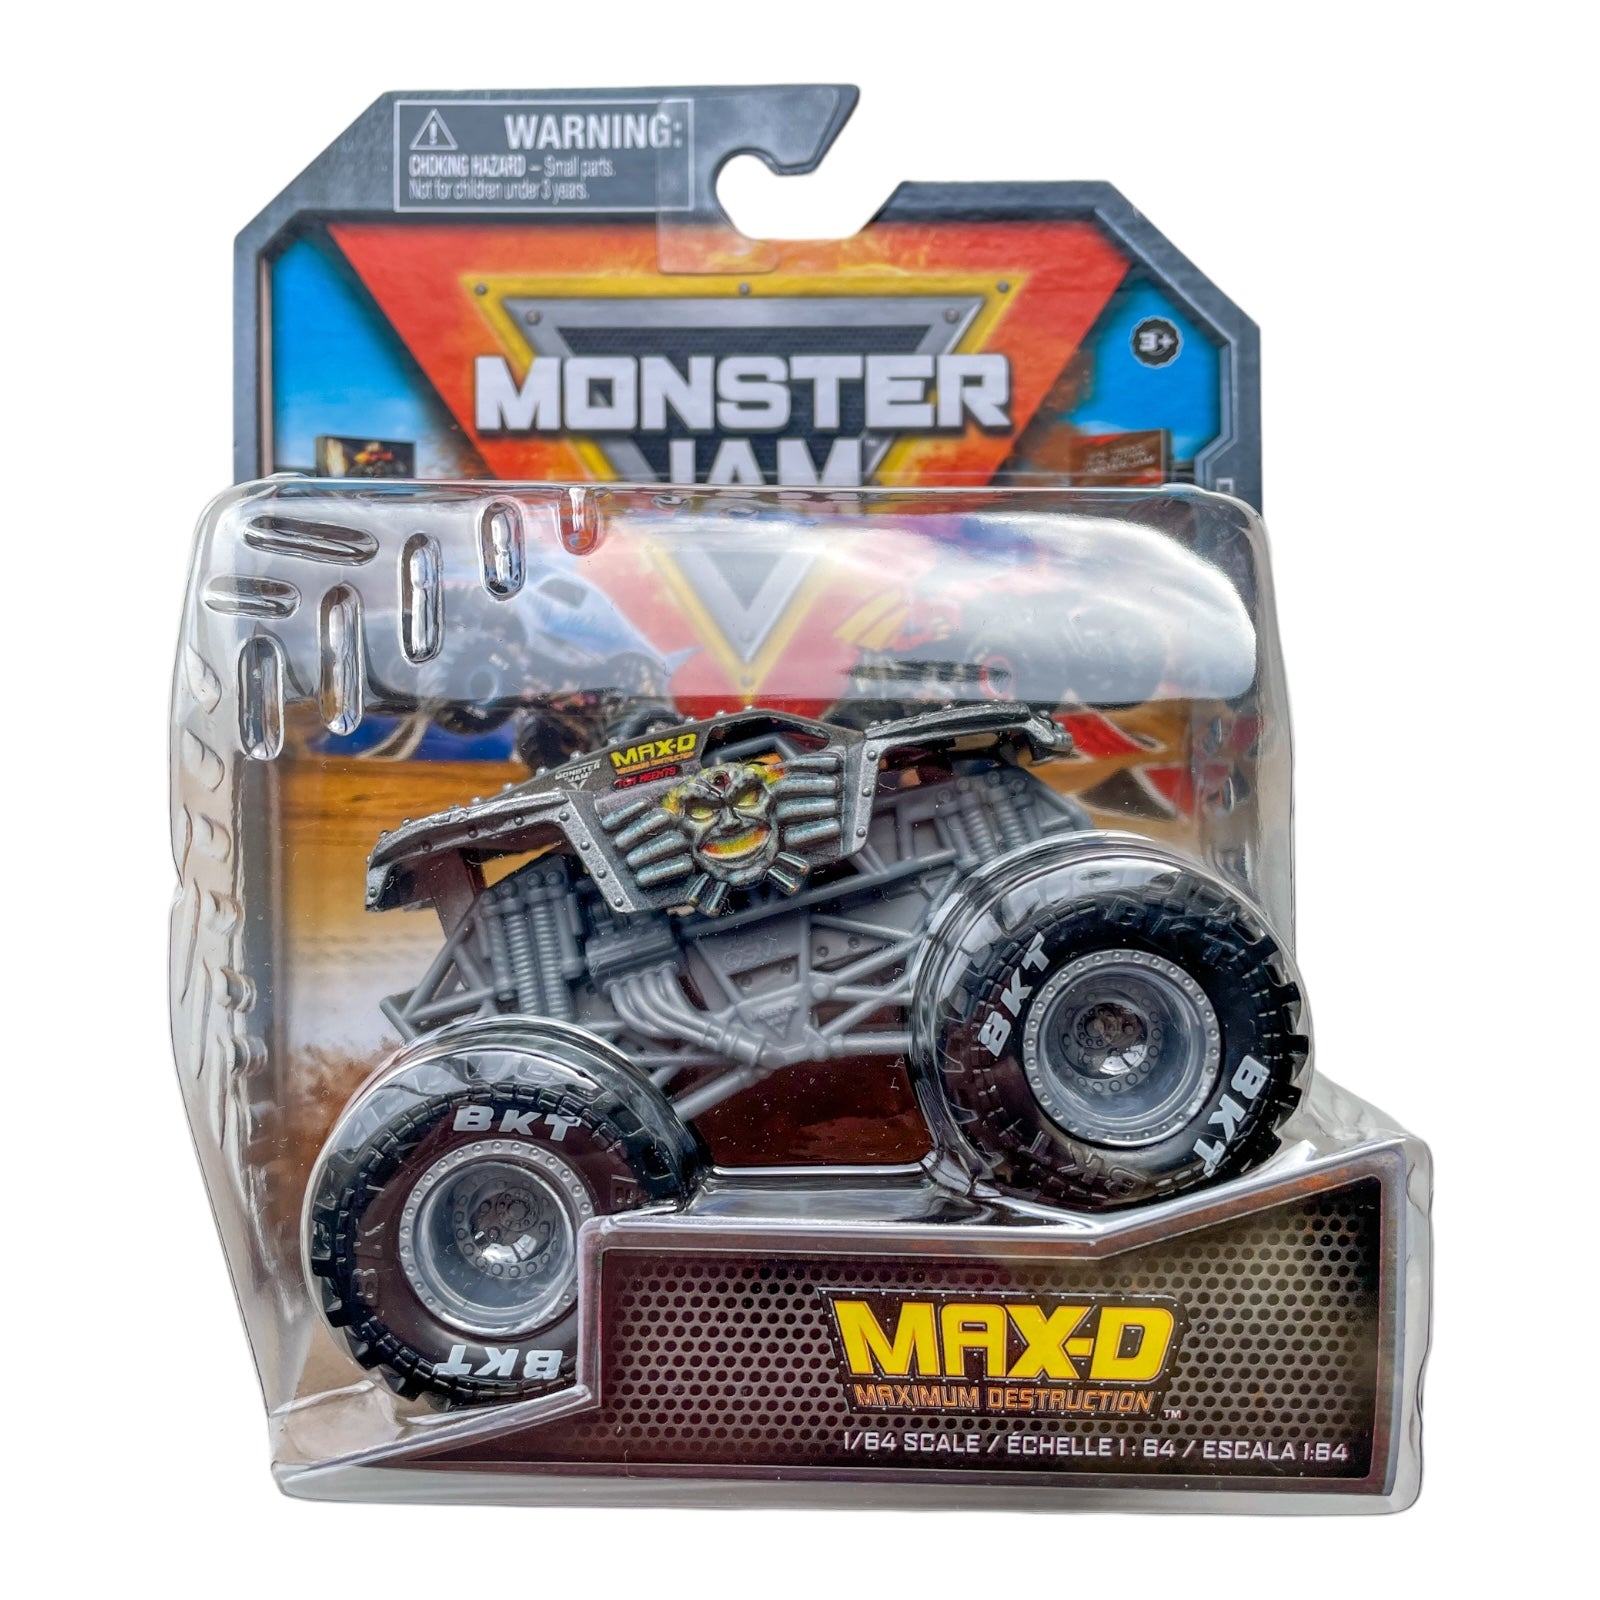 Monster Jam Die-Cast Vehicle 1:64 Scale Max-D Monster Jam